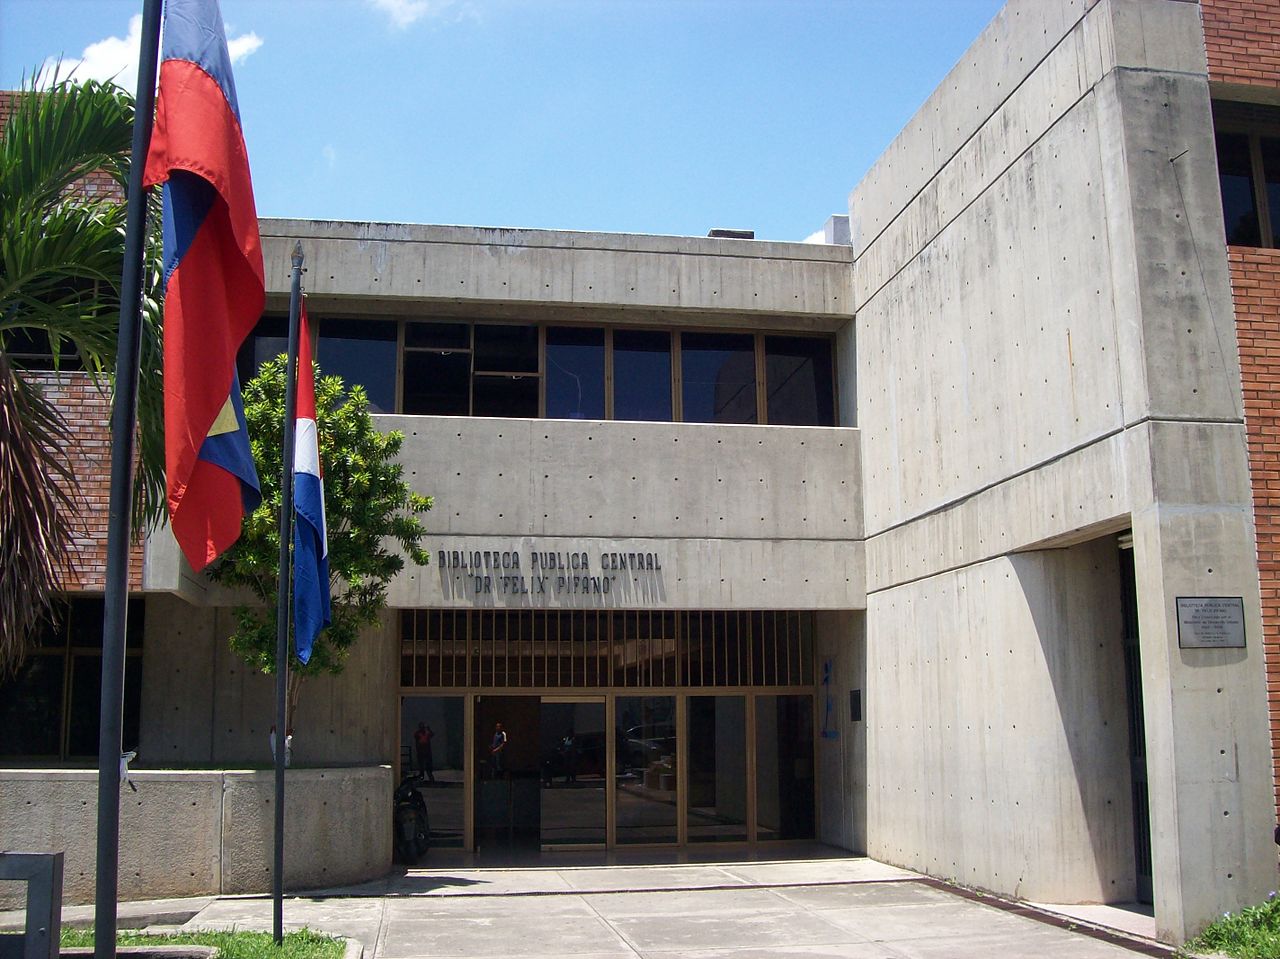 Biblioteca Pública Central Dr. Felix Pifano